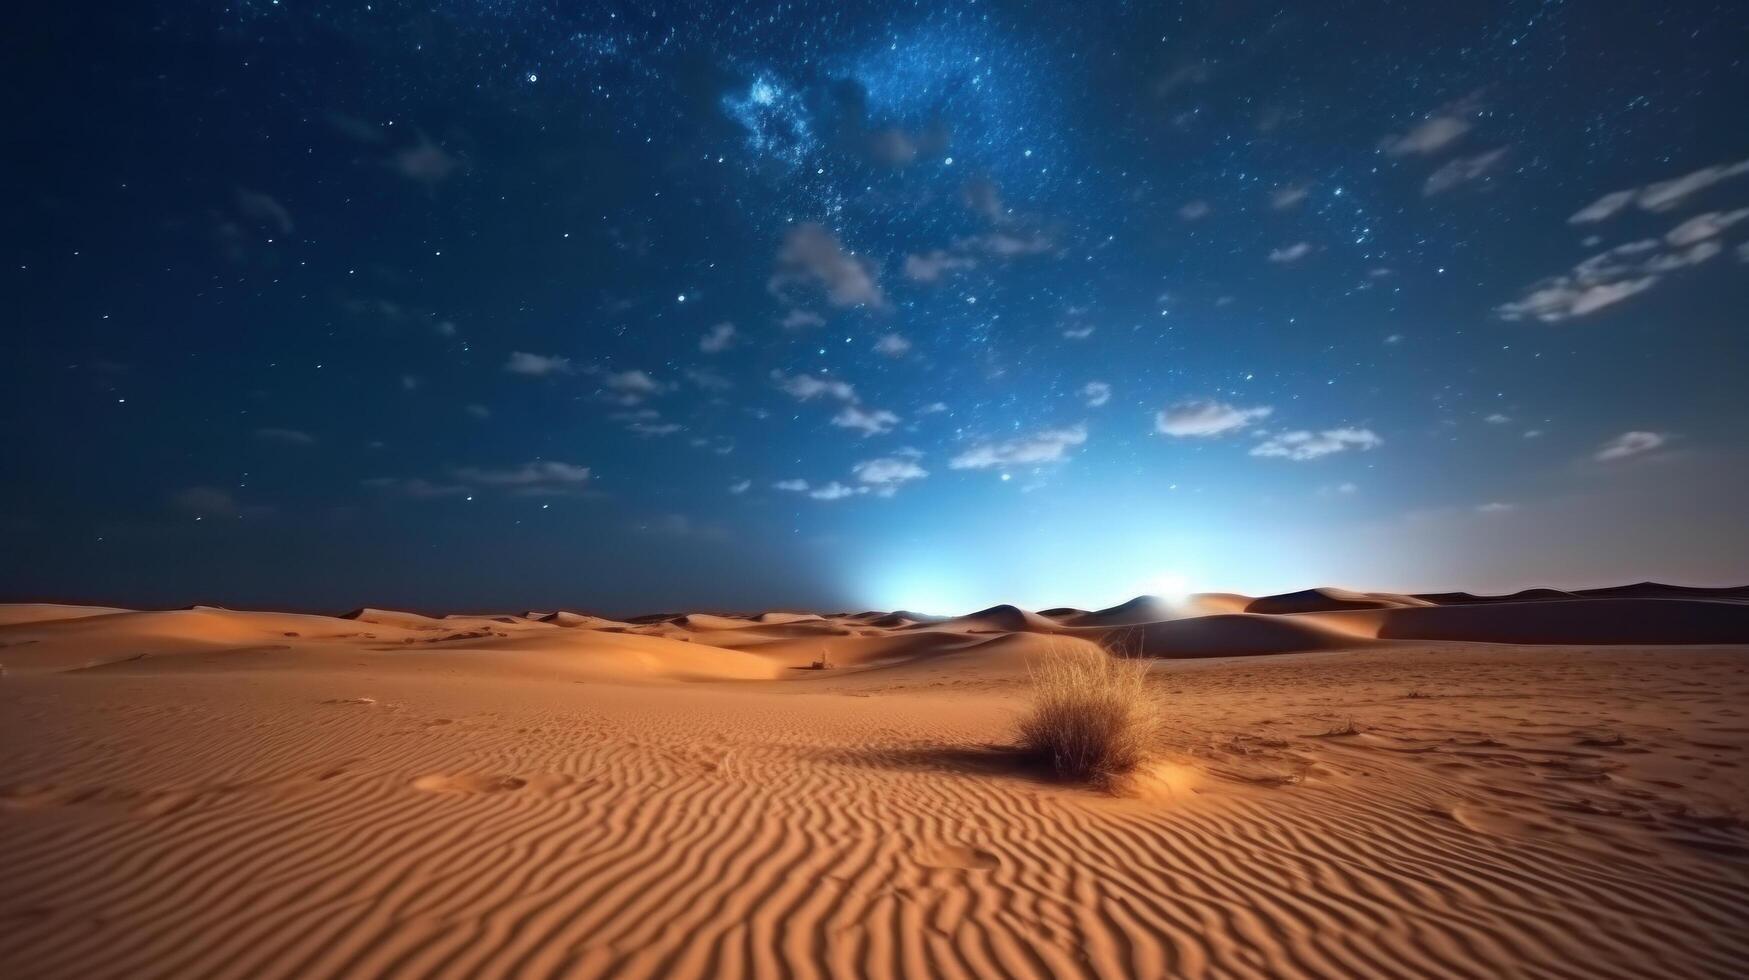 Desert and starry night. Illustration photo